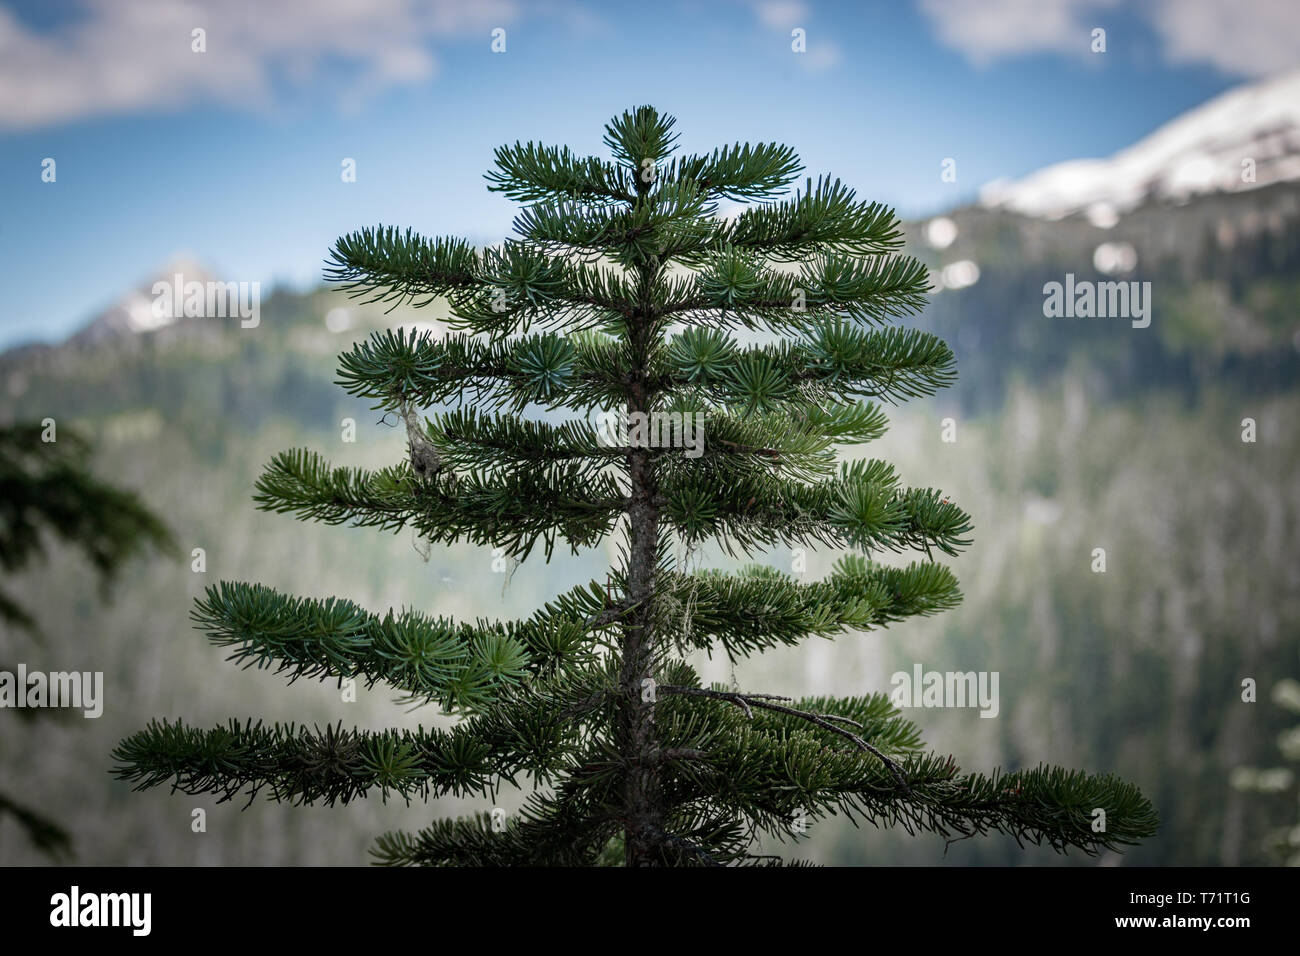 Evergreen trees grow large on Mt Rainier in Washington state. Stock Photo